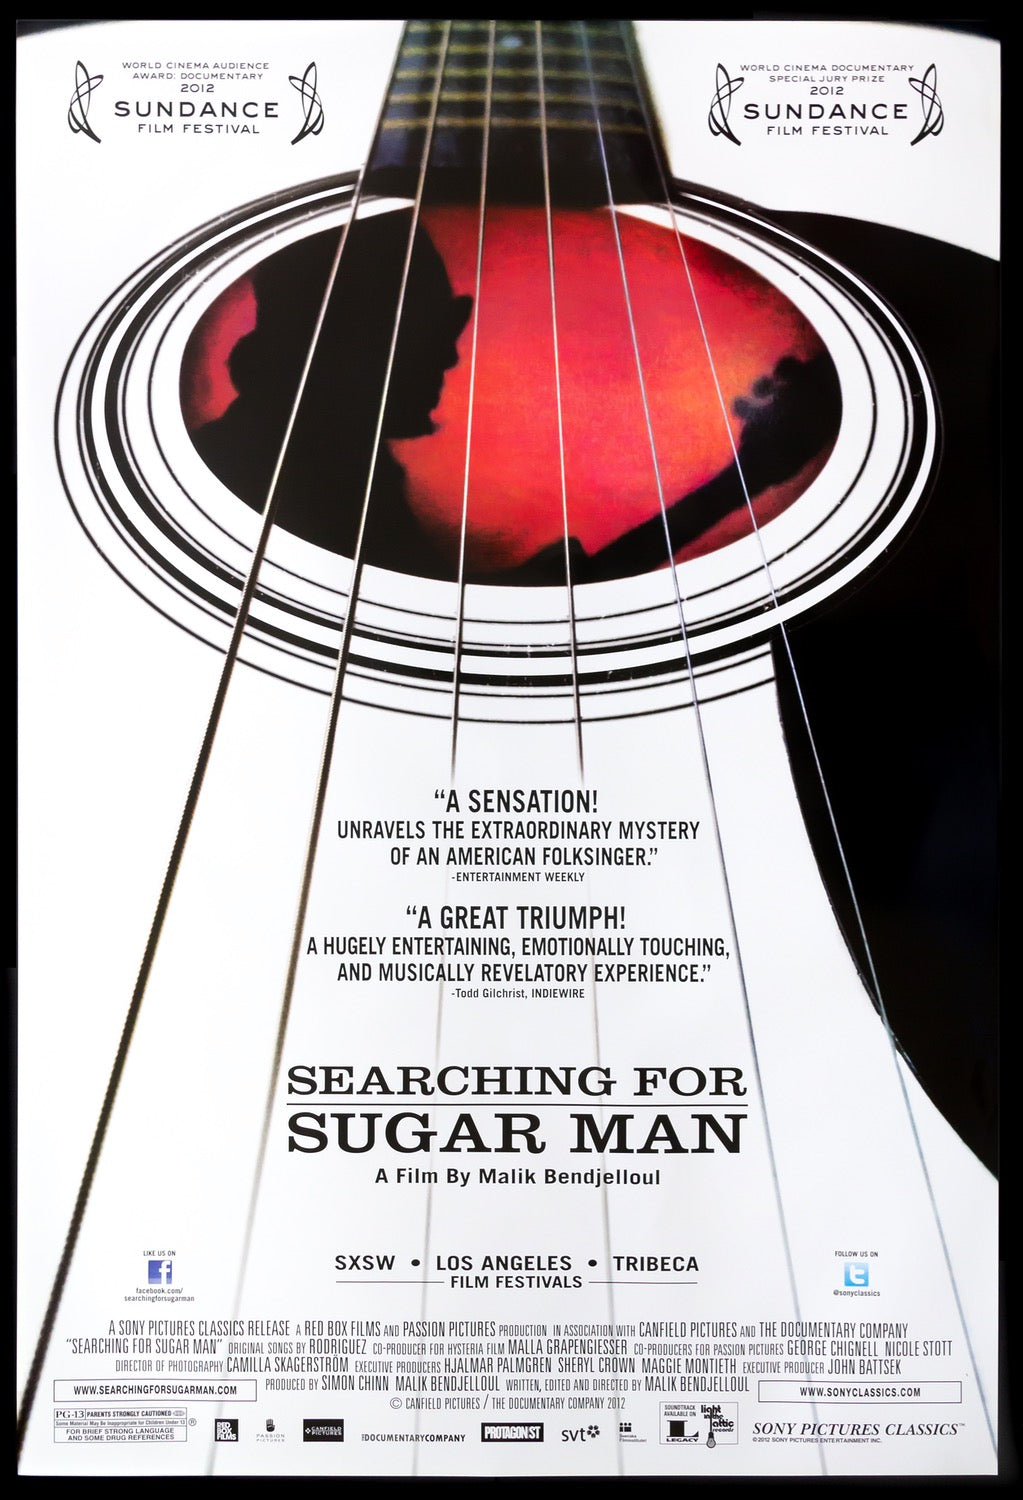 Searching for Sugar Man (2012) original movie poster for sale at Original Film Art